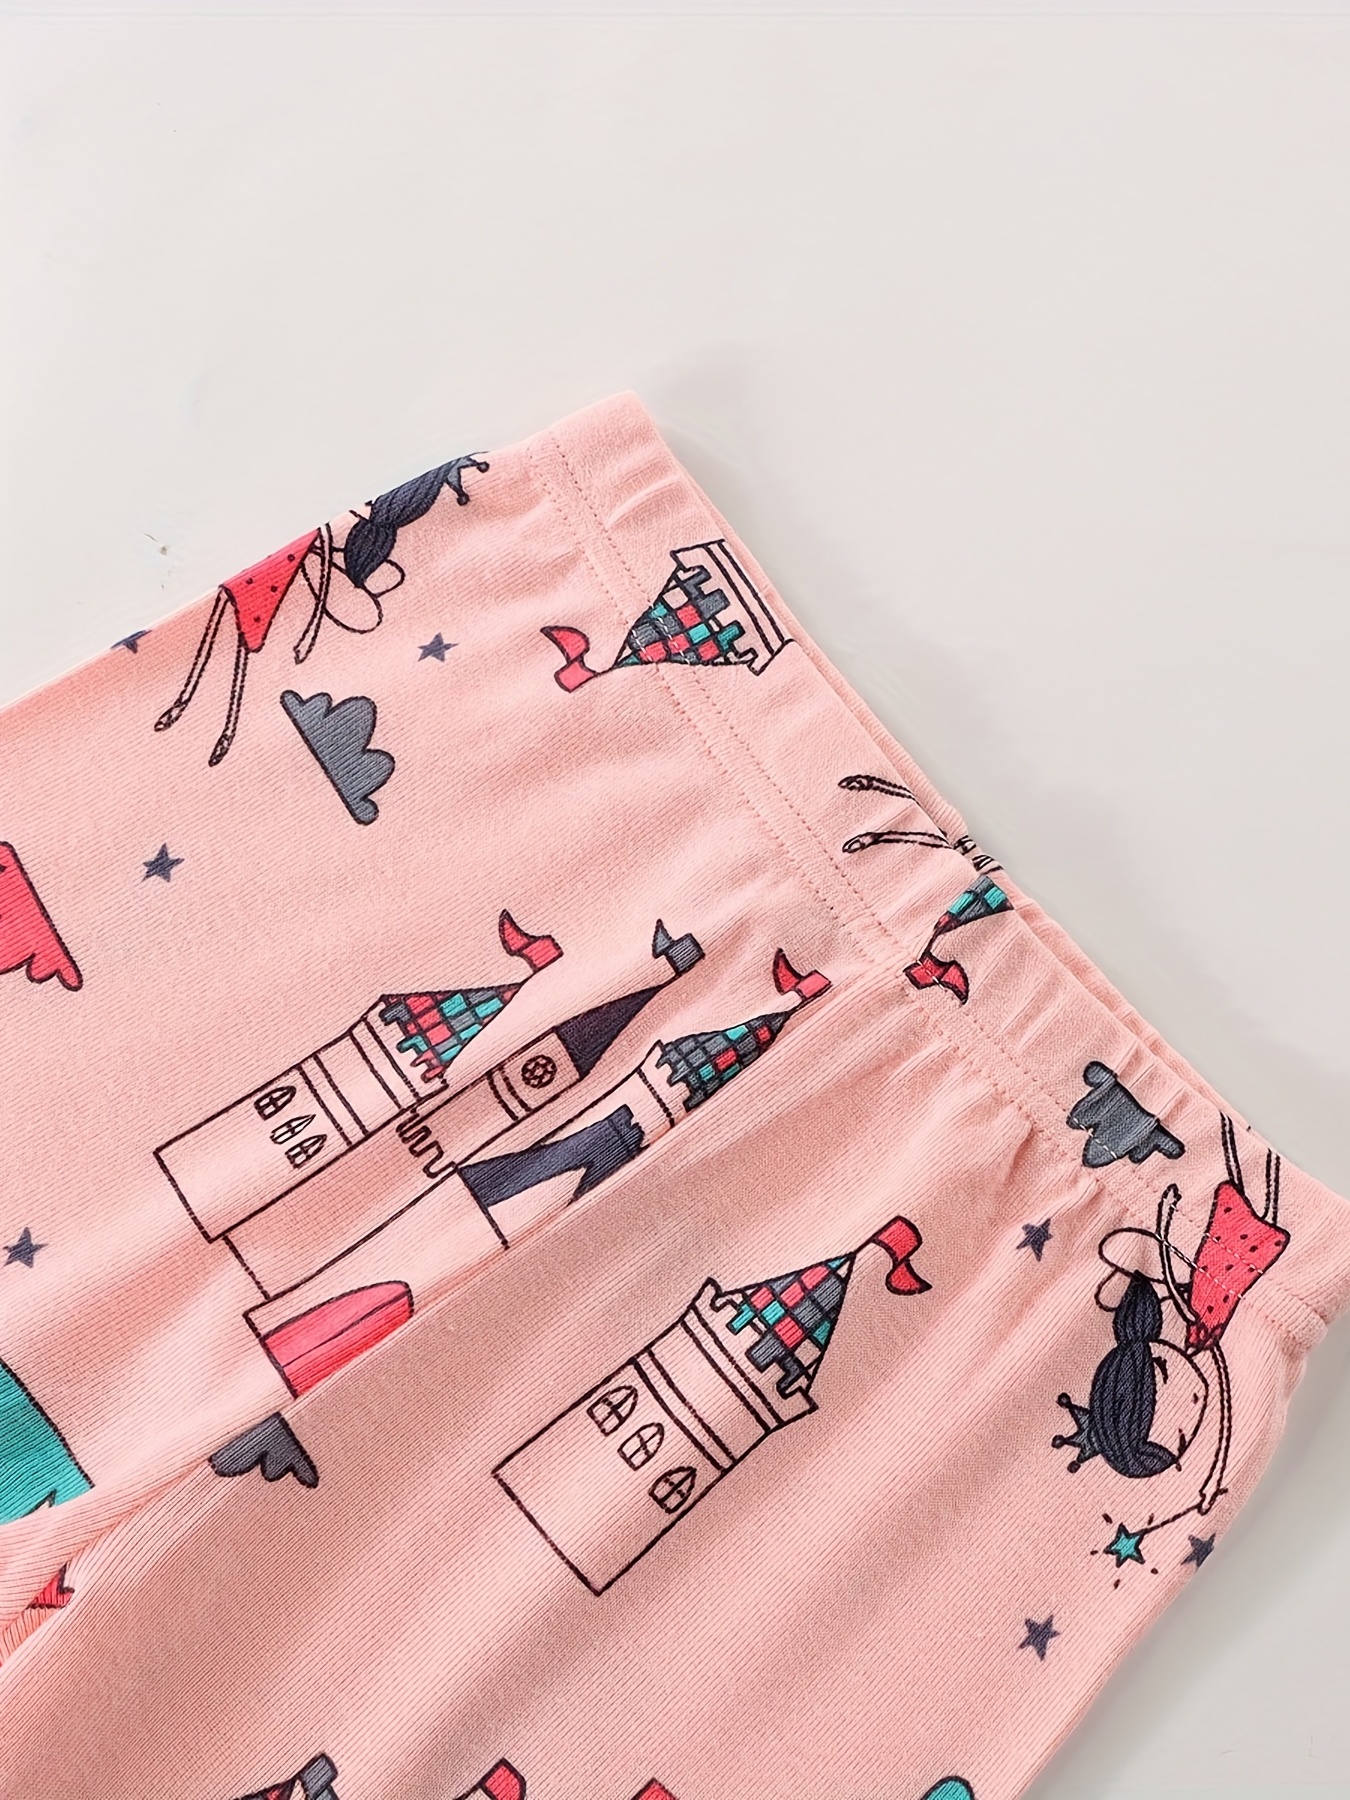 Conjunto pijama de niño pantalón y blusa manga larga - BECO